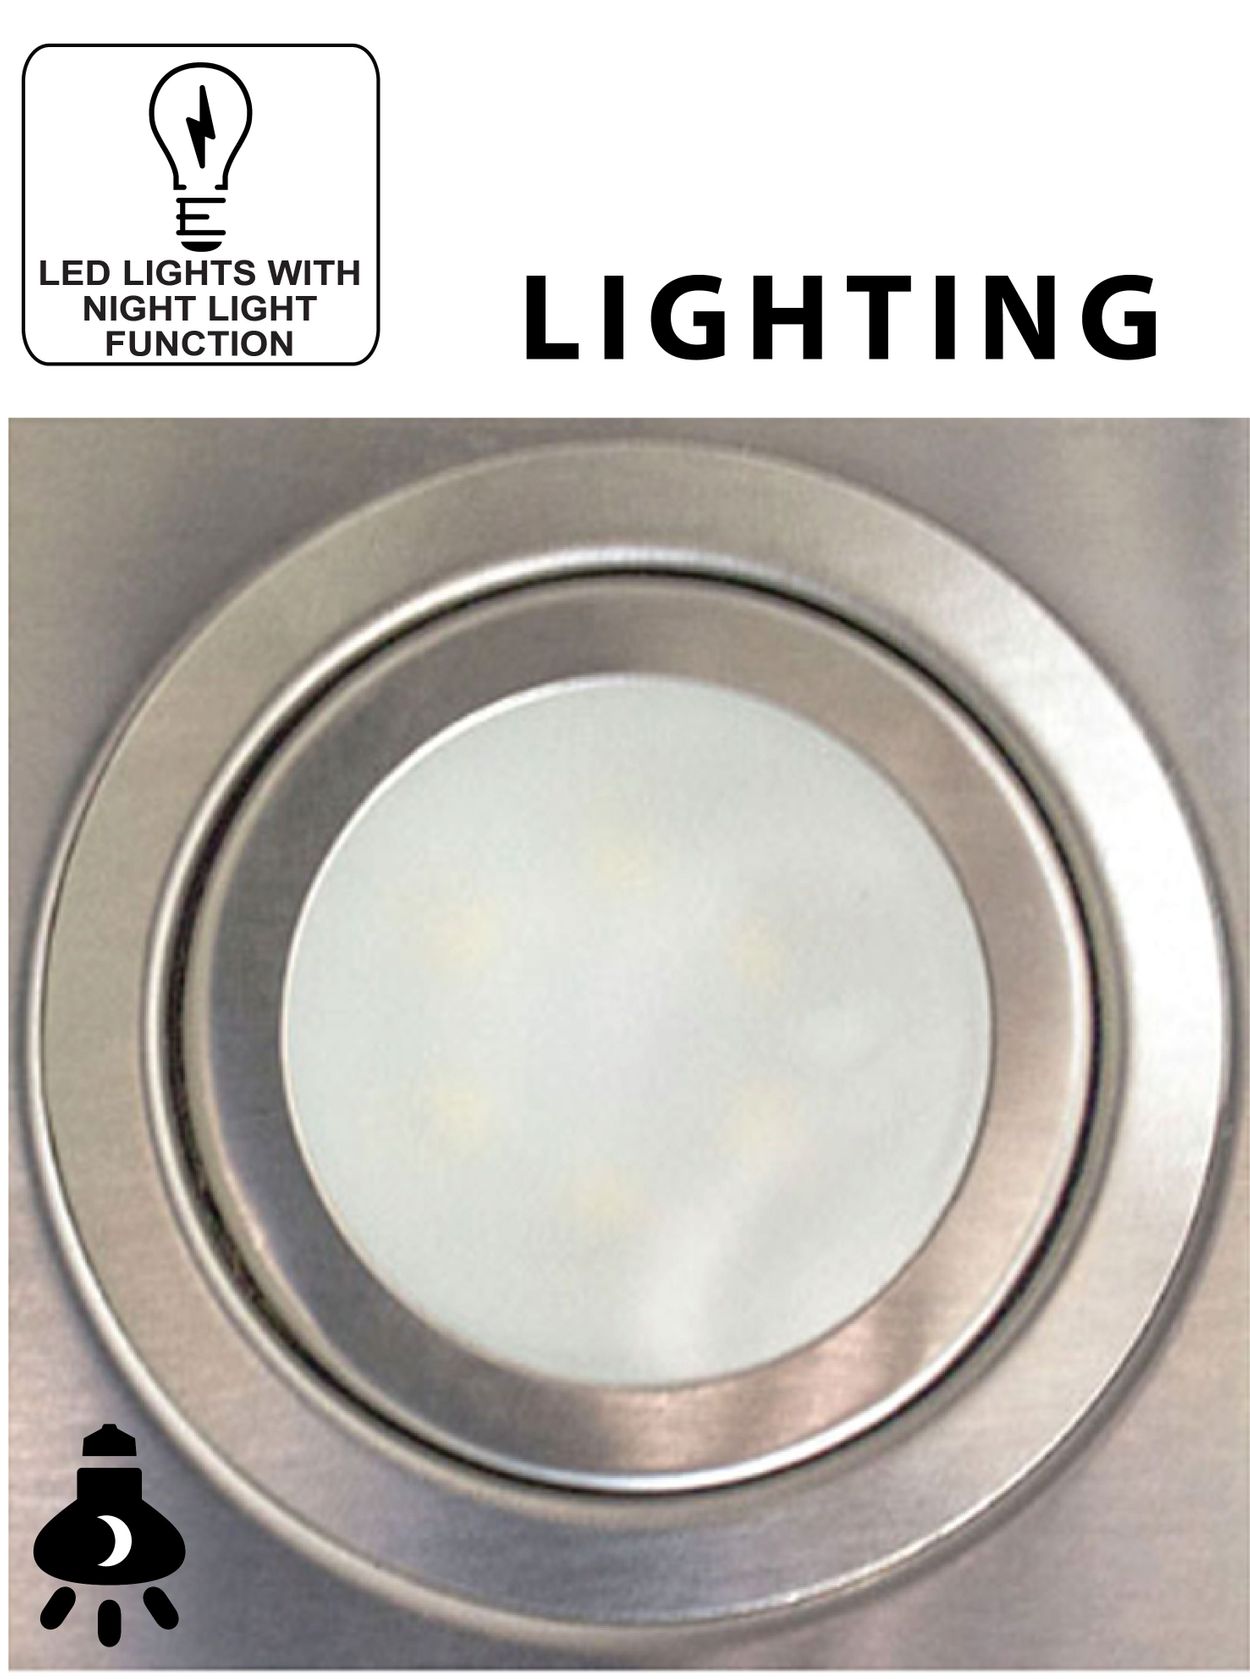 LED lights with Night Light Function. Lighting.